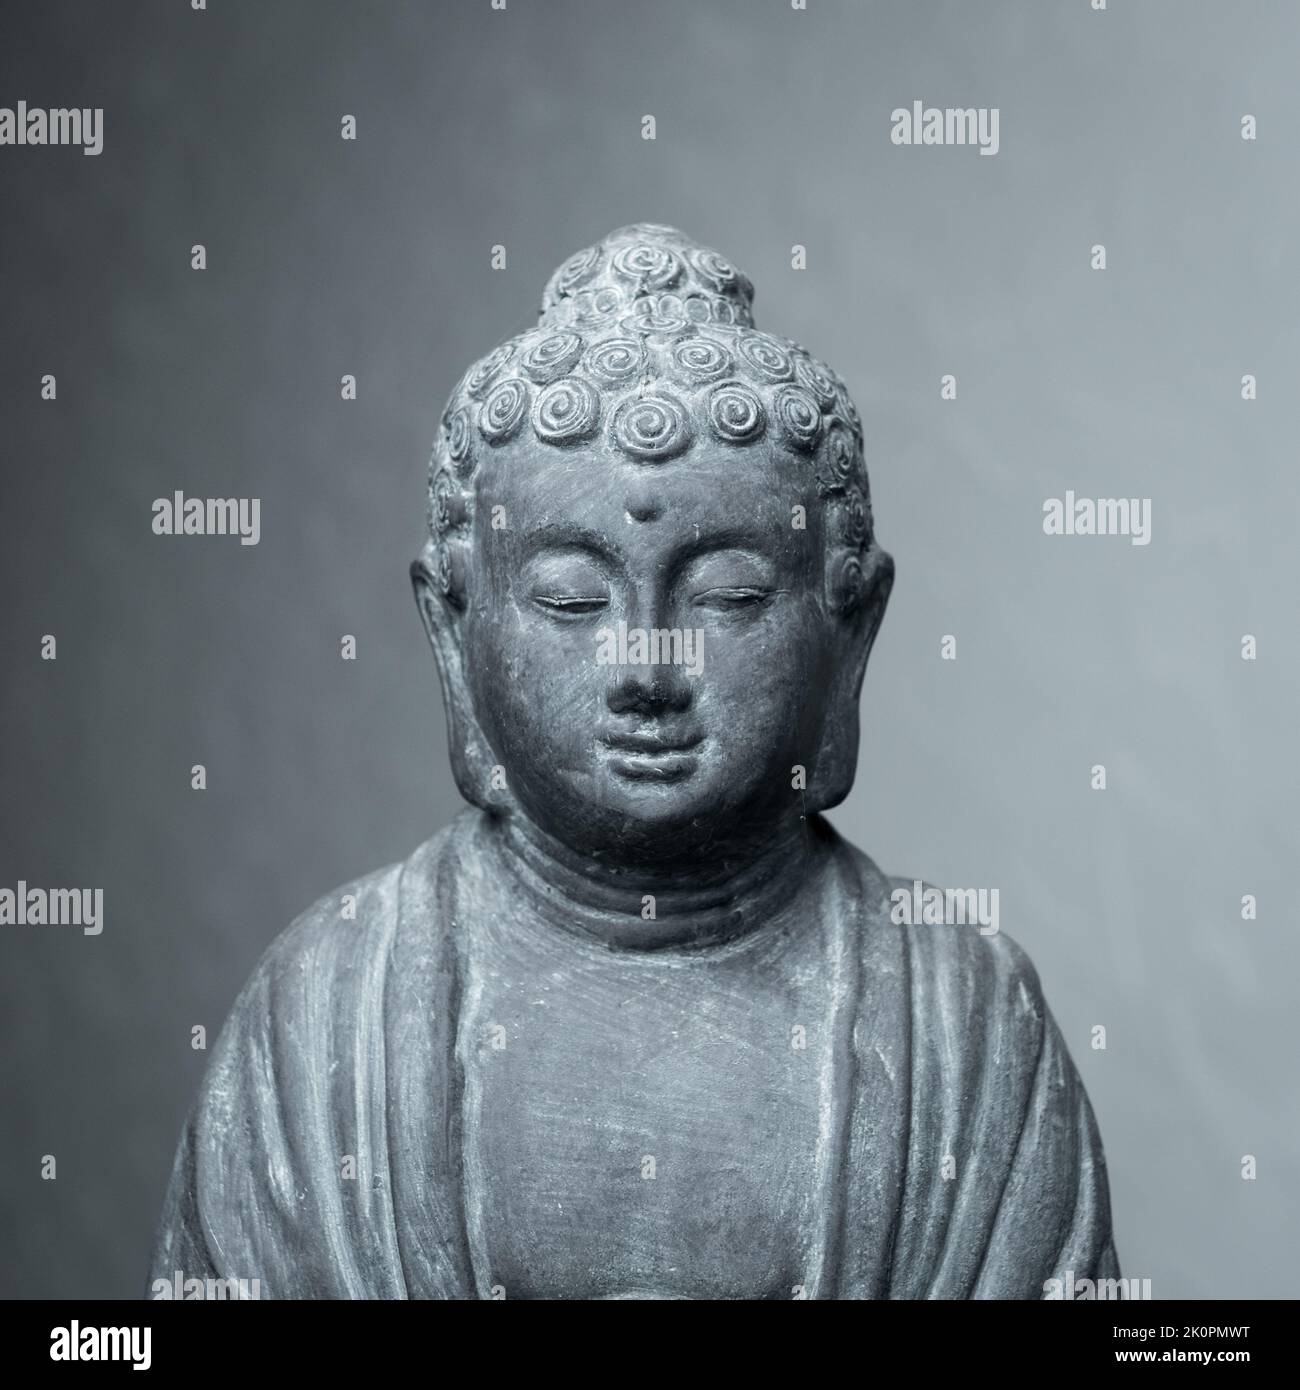 Siddharha Gautama Buddha statue made of grey stone as interior decoration Stock Photo